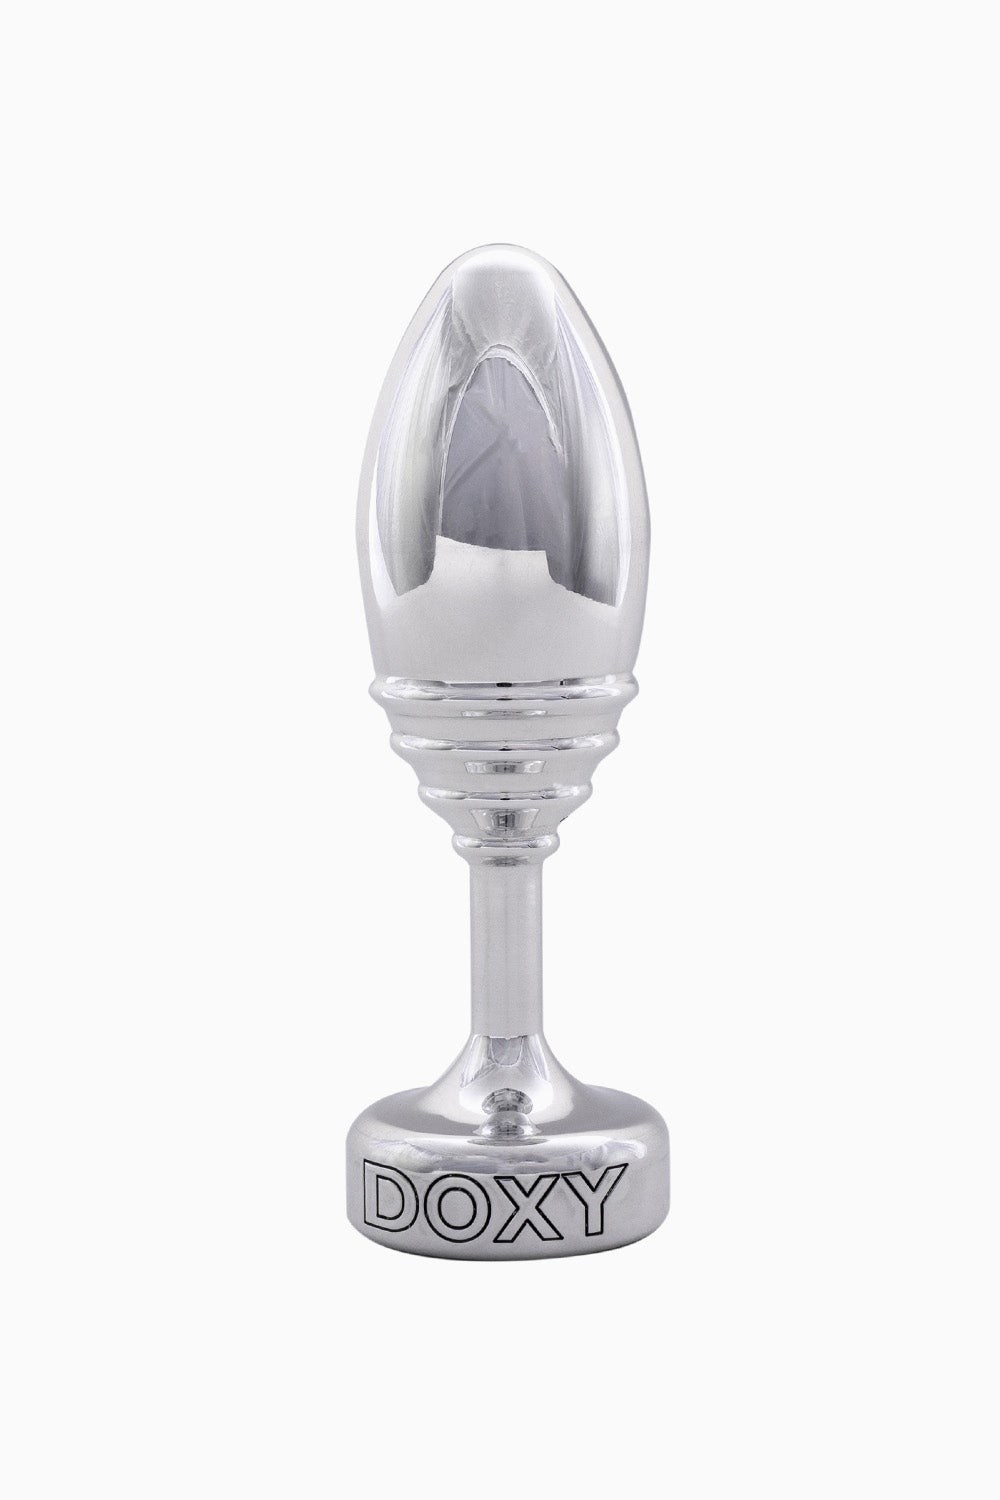 Doxy Butt Plug Silver - Ribbed